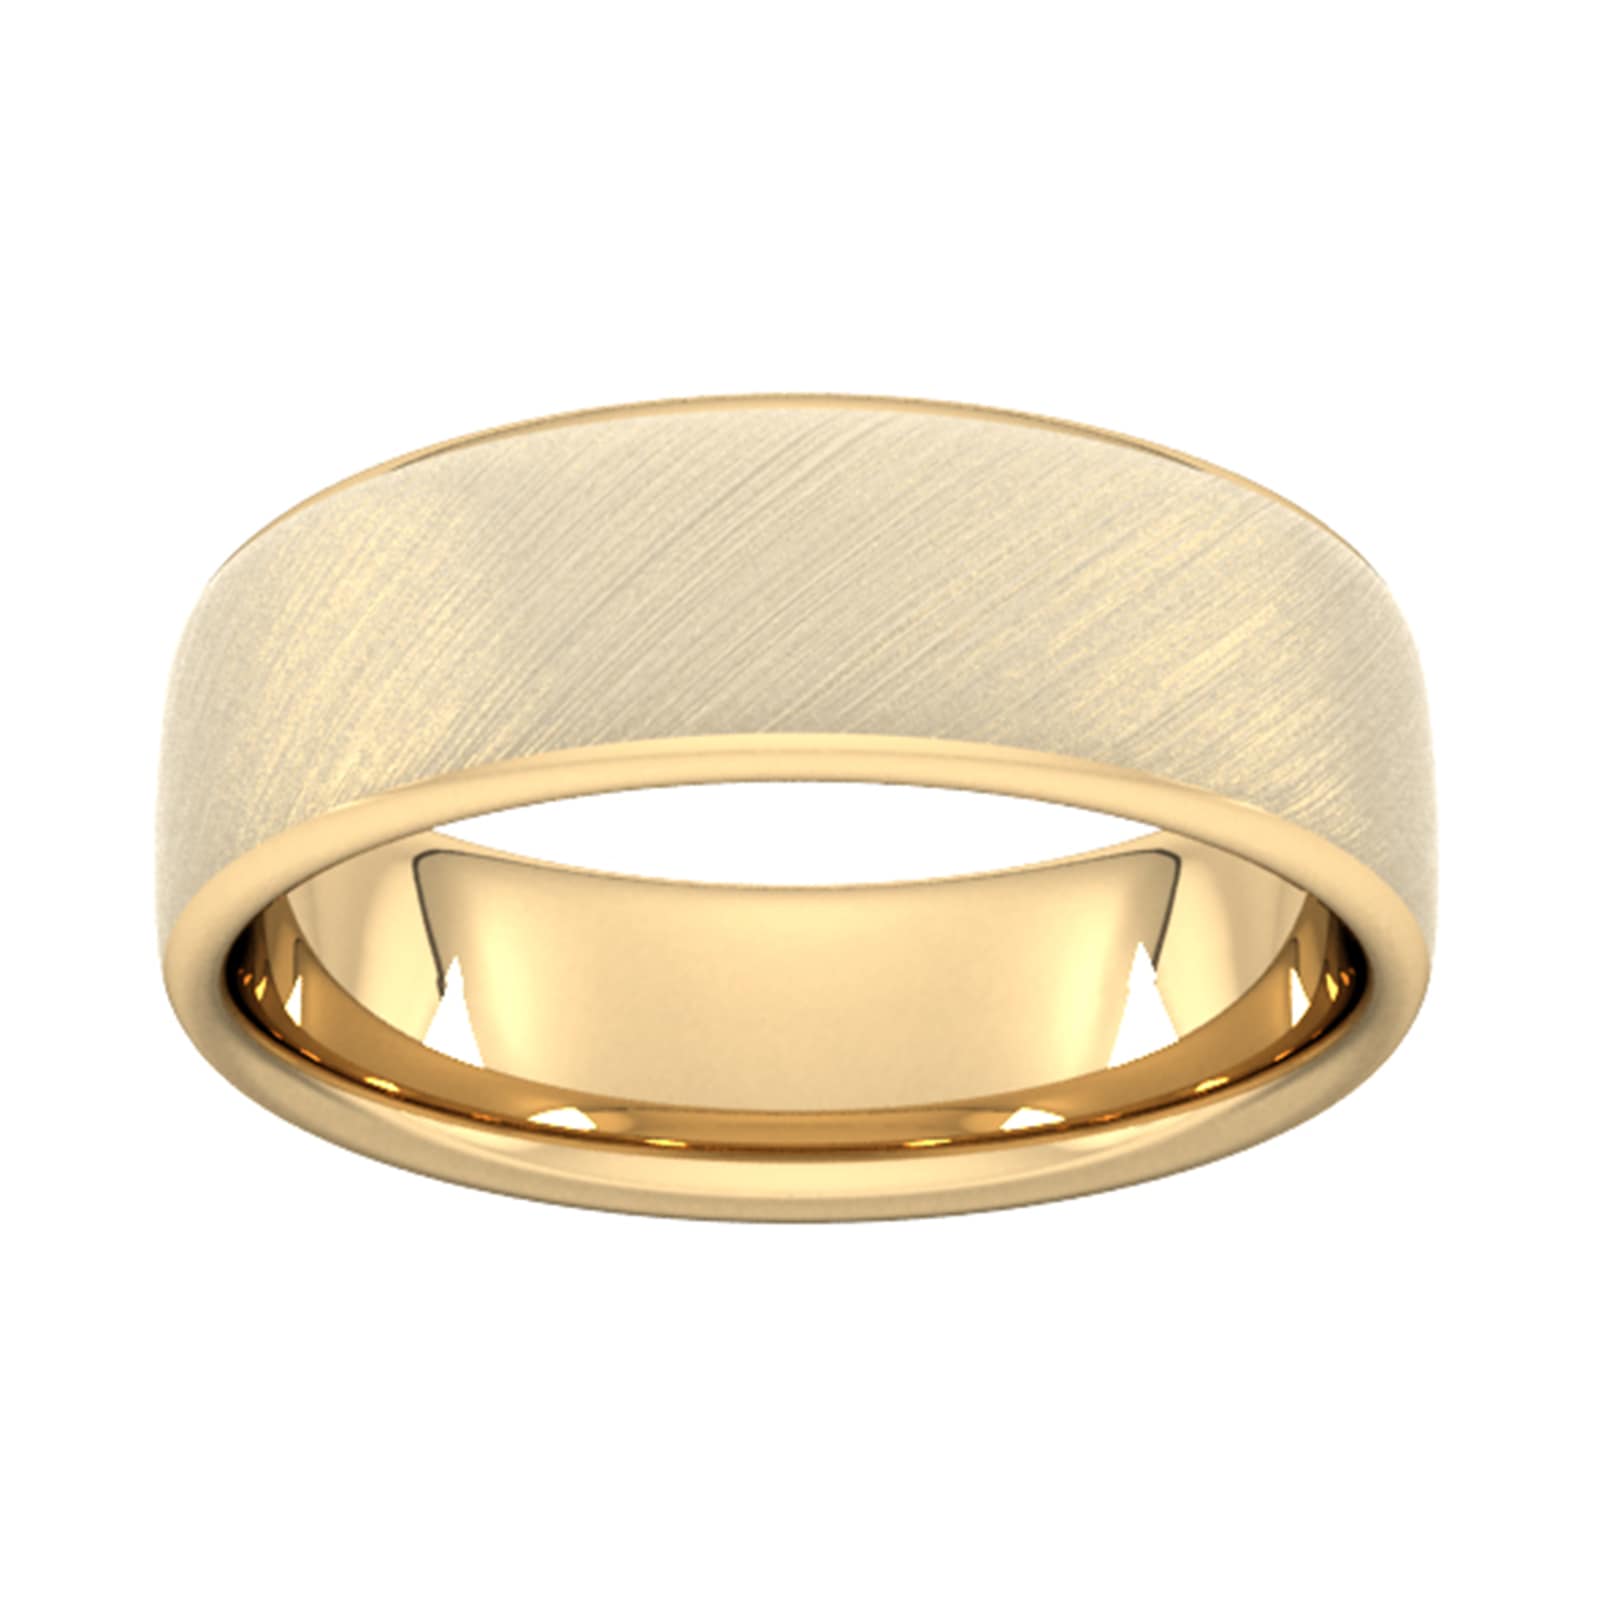 7mm Slight Court Standard Diagonal Matt Finish Wedding Ring In 18 Carat Yellow Gold - Ring Size L